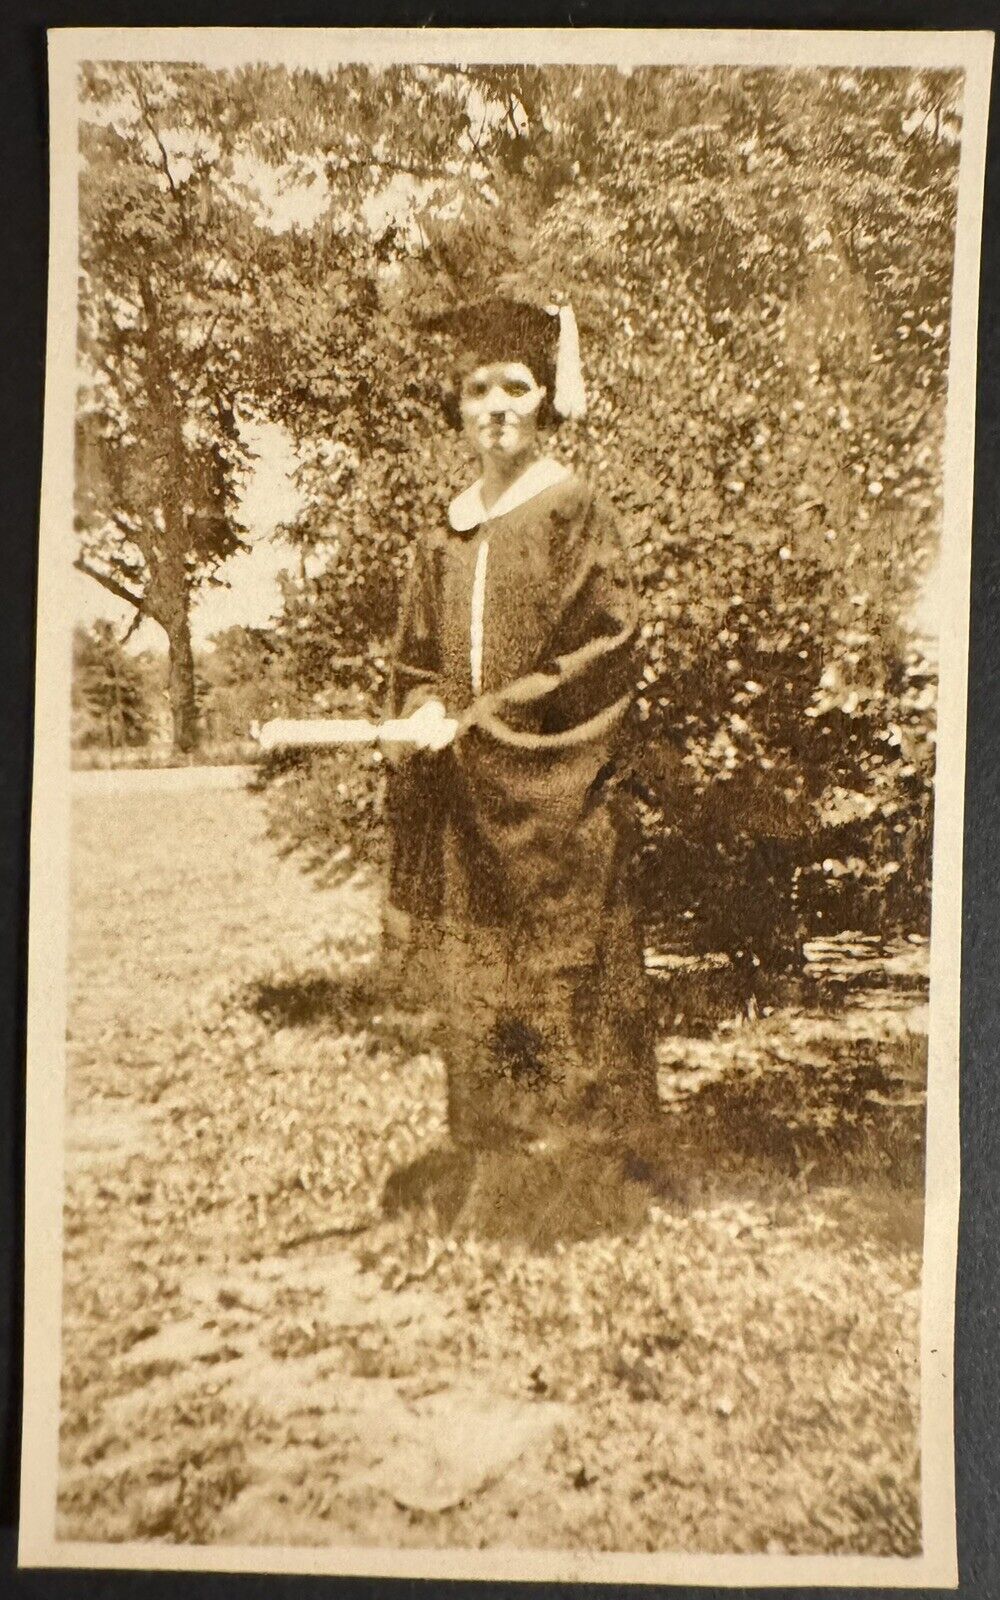 Photo Sepia Tone Graduation Woman Girl High School College Vintage Photograph